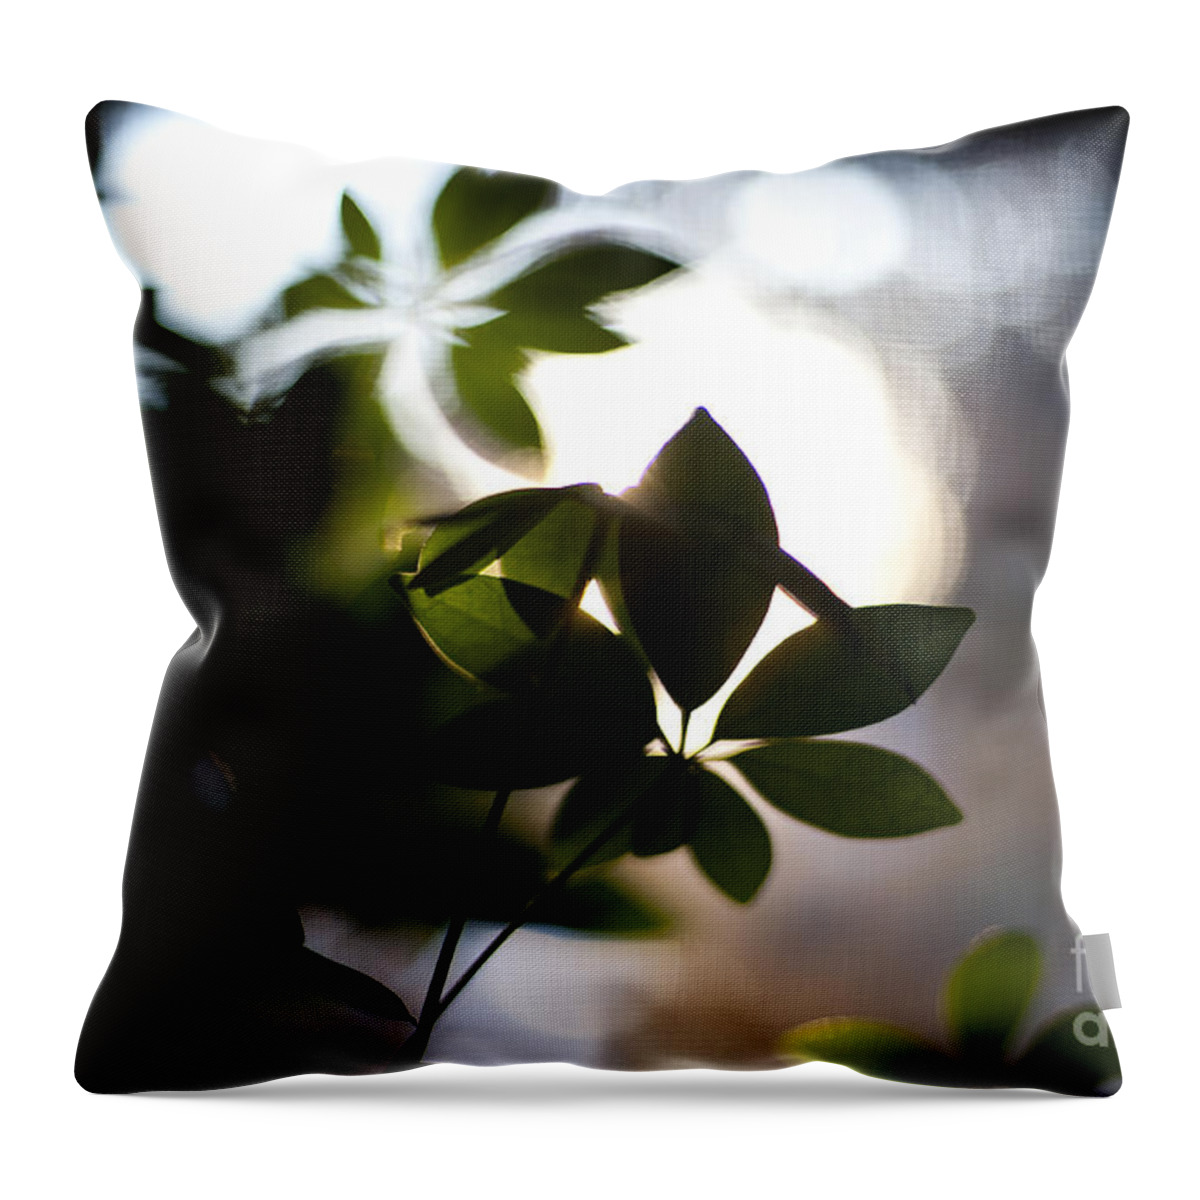 Morning Throw Pillow featuring the photograph Umbrella Plant Summer Morning by Steven Dunn